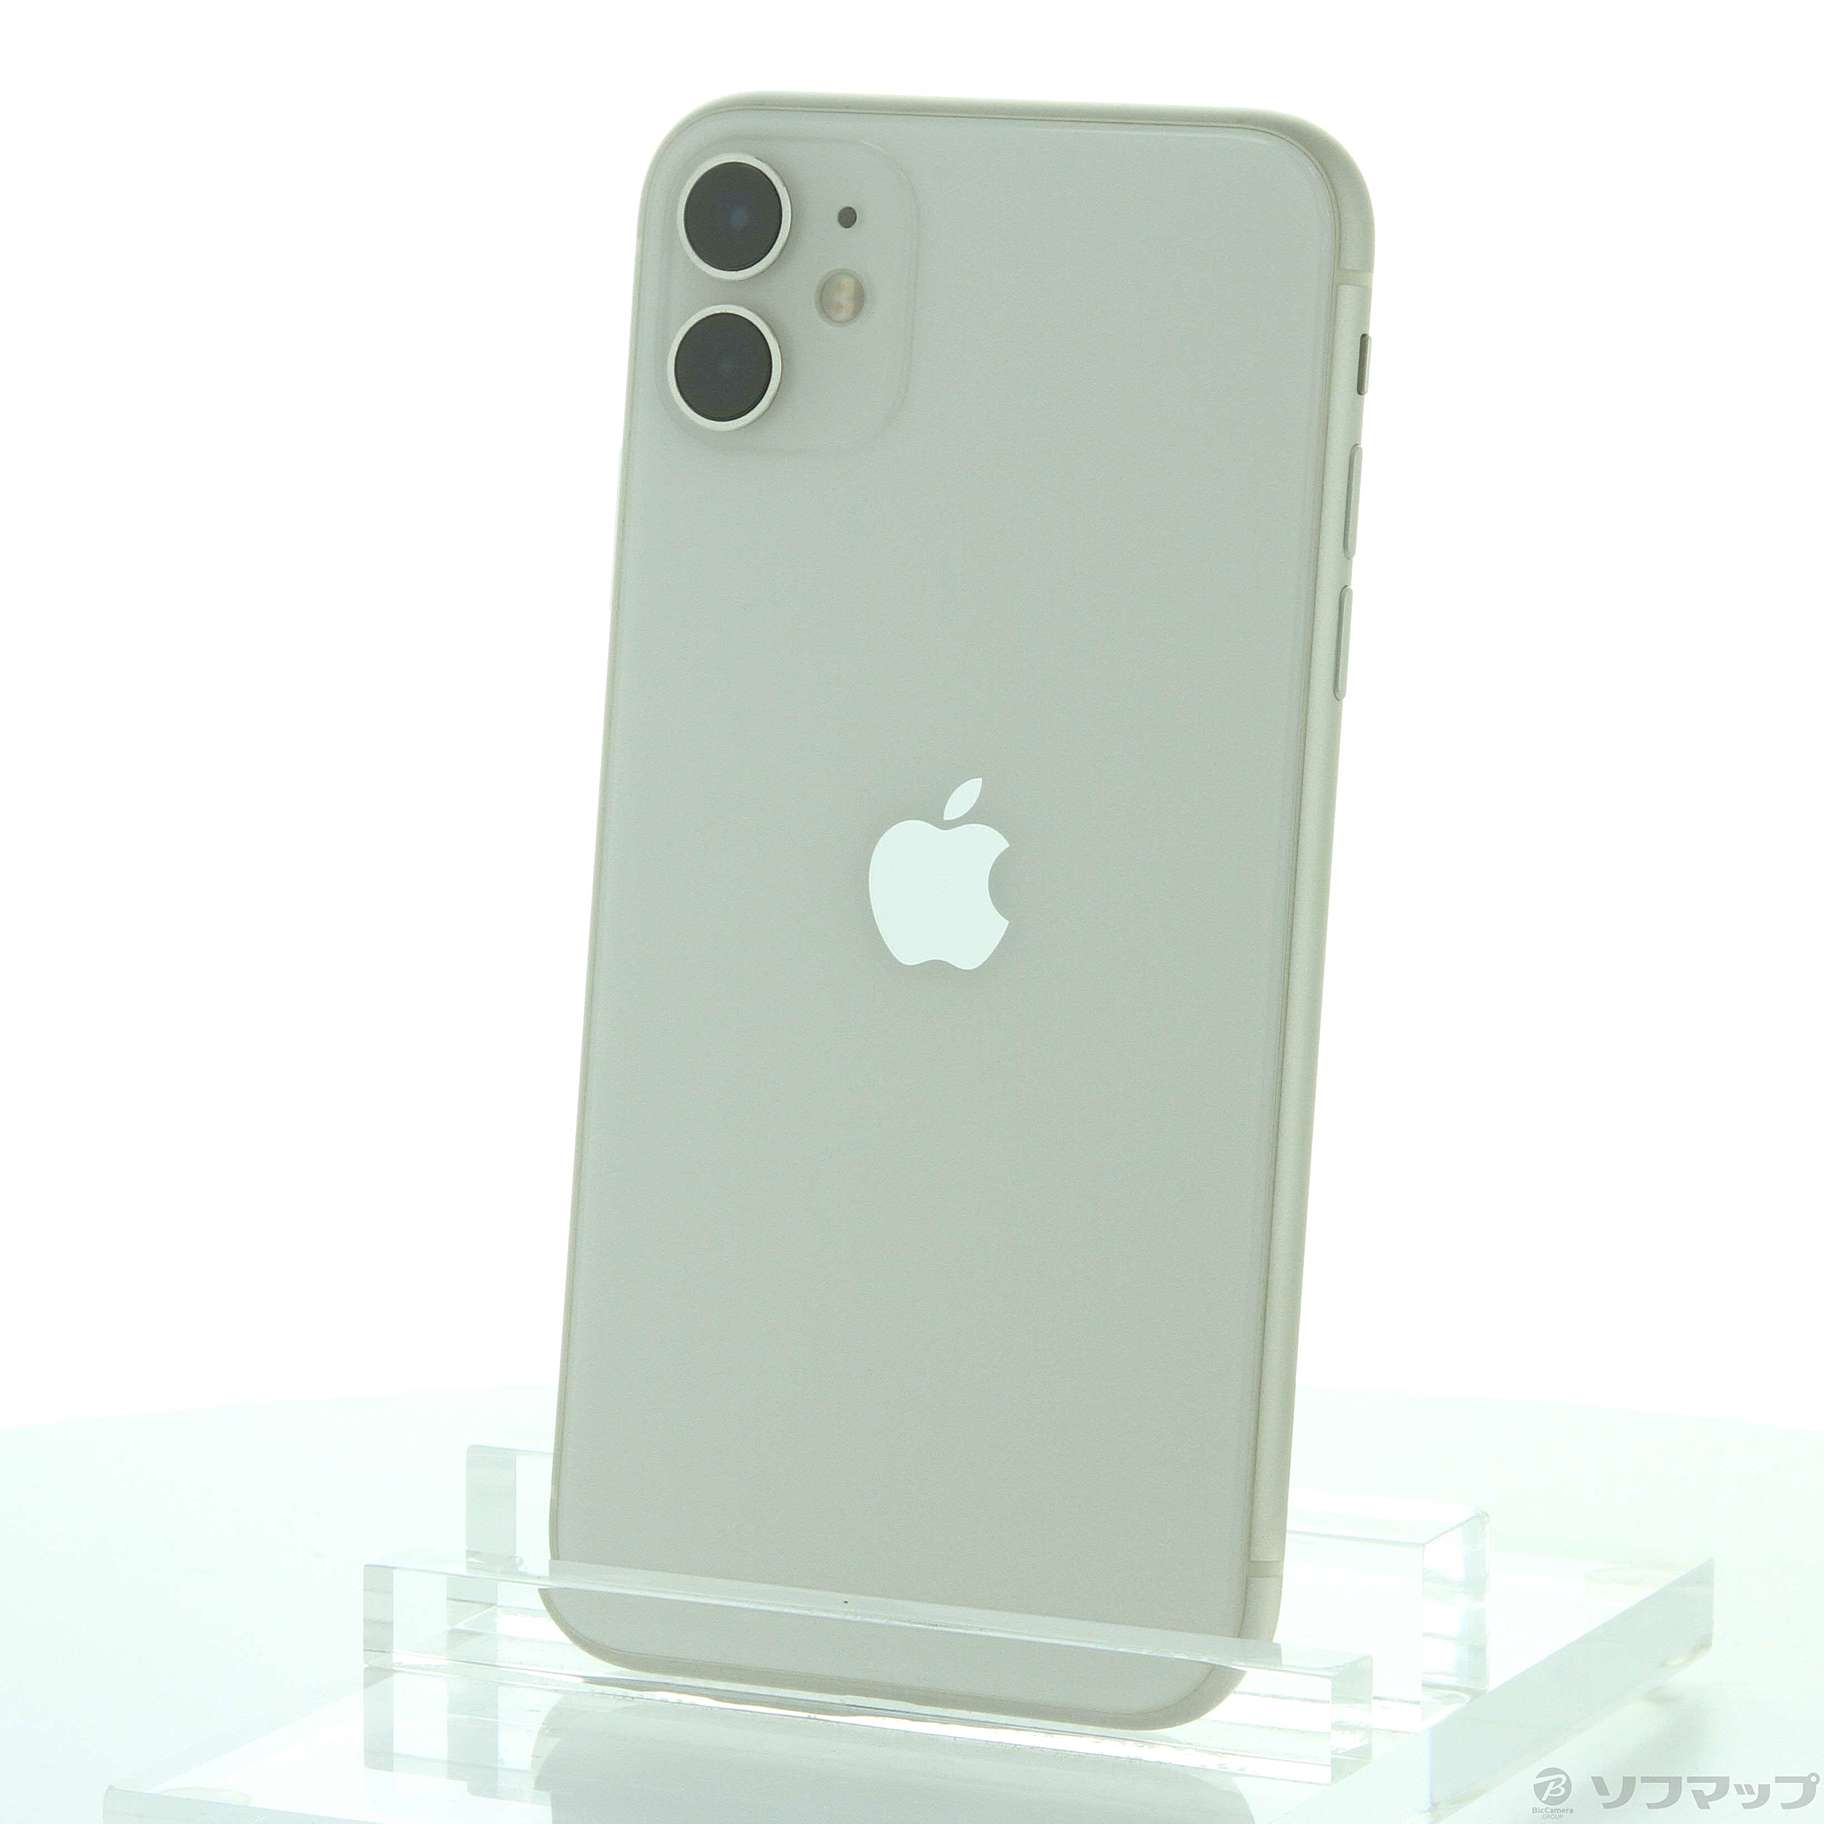 iPhone 11 256GB ホワイト SIMフリー